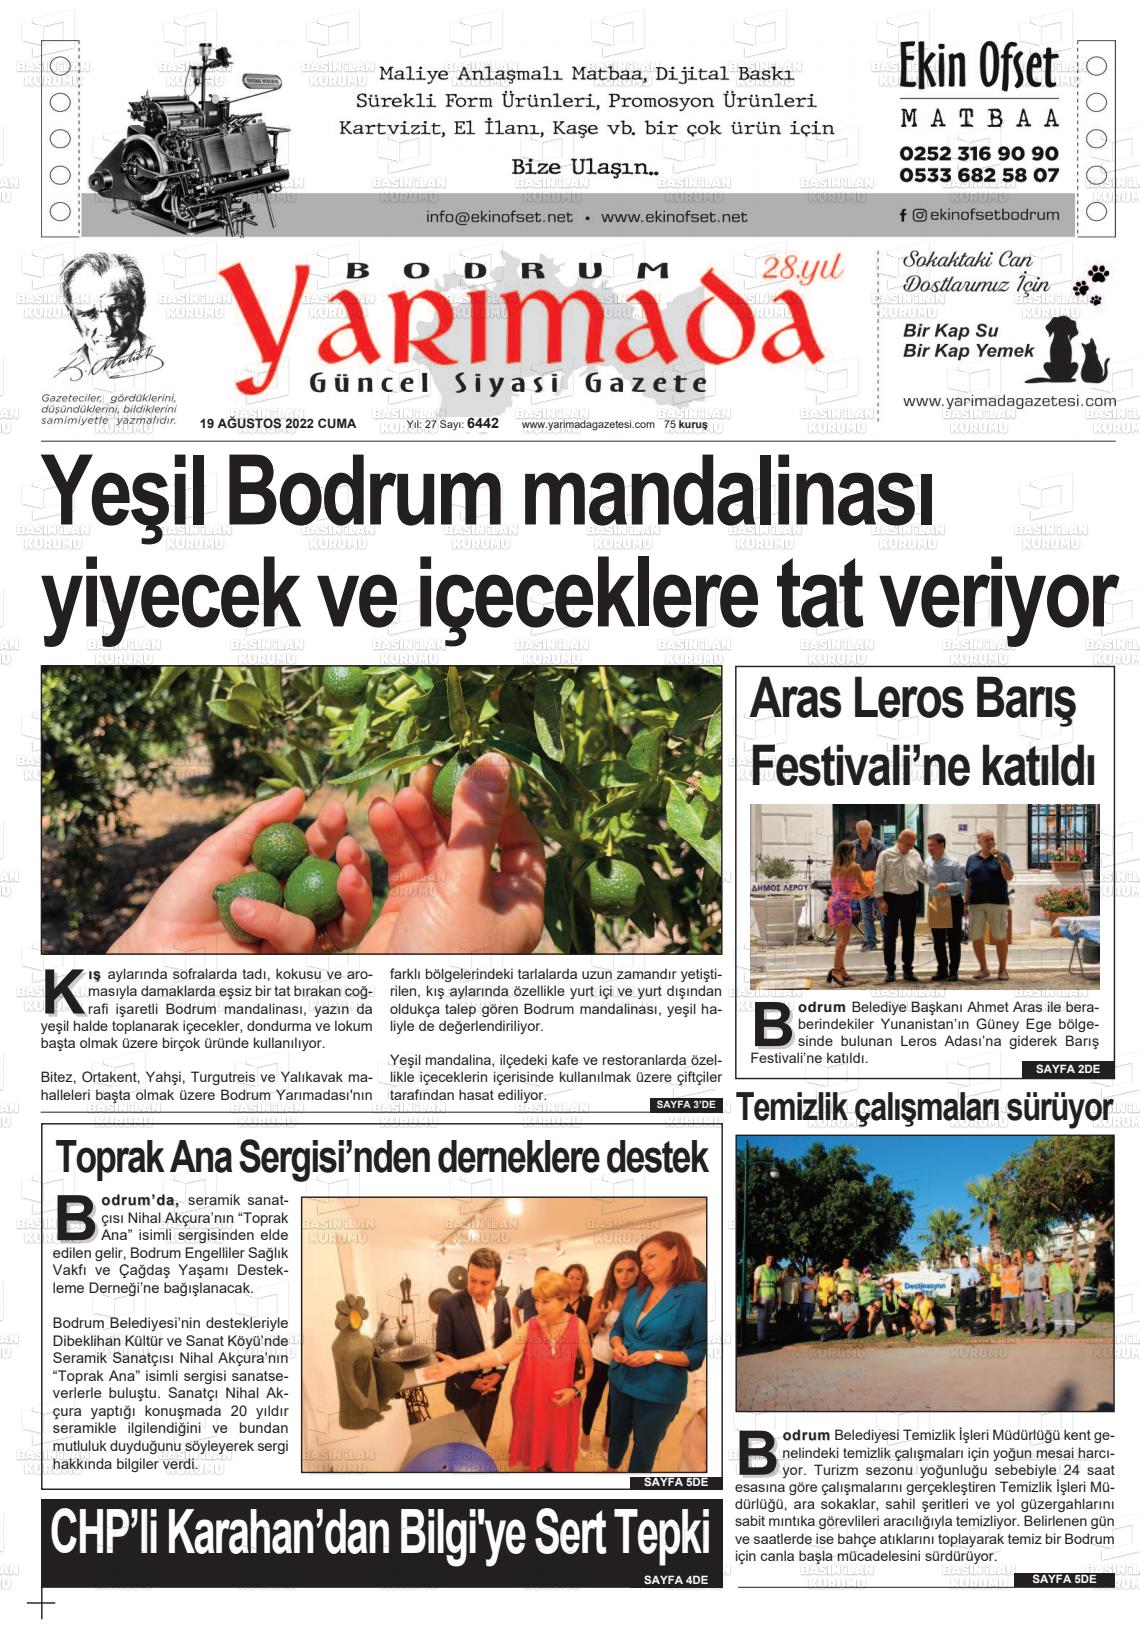 19 Ağustos 2022 Bodrum Yarimada Gazete Manşeti